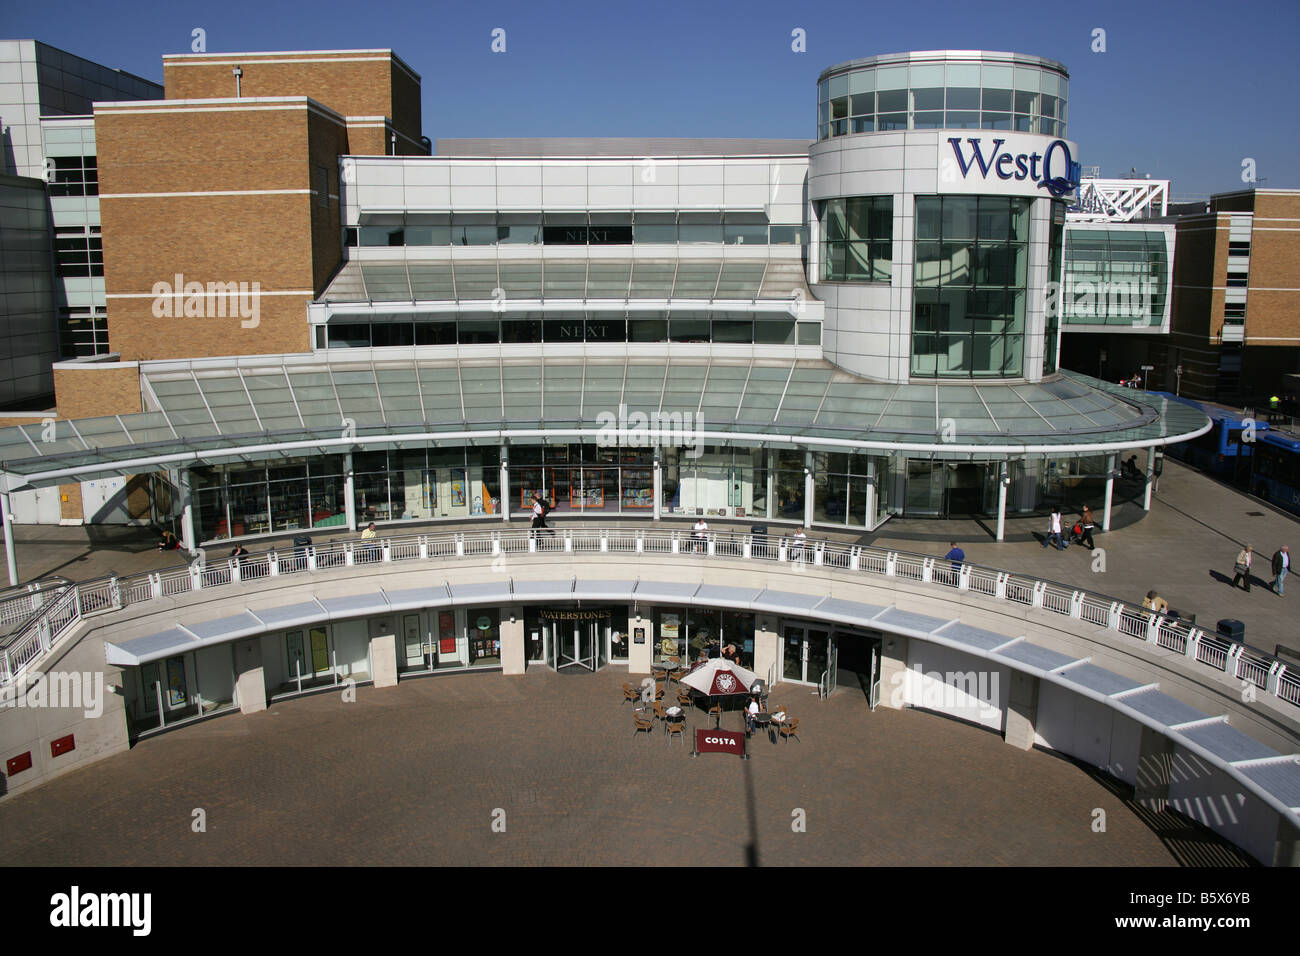 City of Southampton, England. The Portland Terrace entrance to Southampton’s West Quay shopping complex. Stock Photo